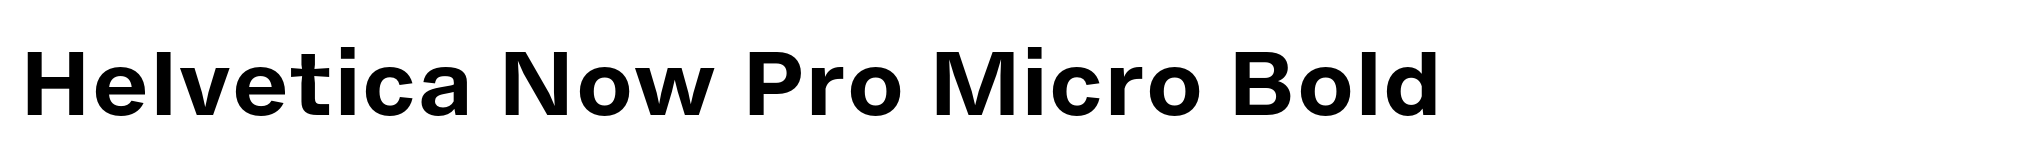 Helvetica Now Pro Micro Bold image